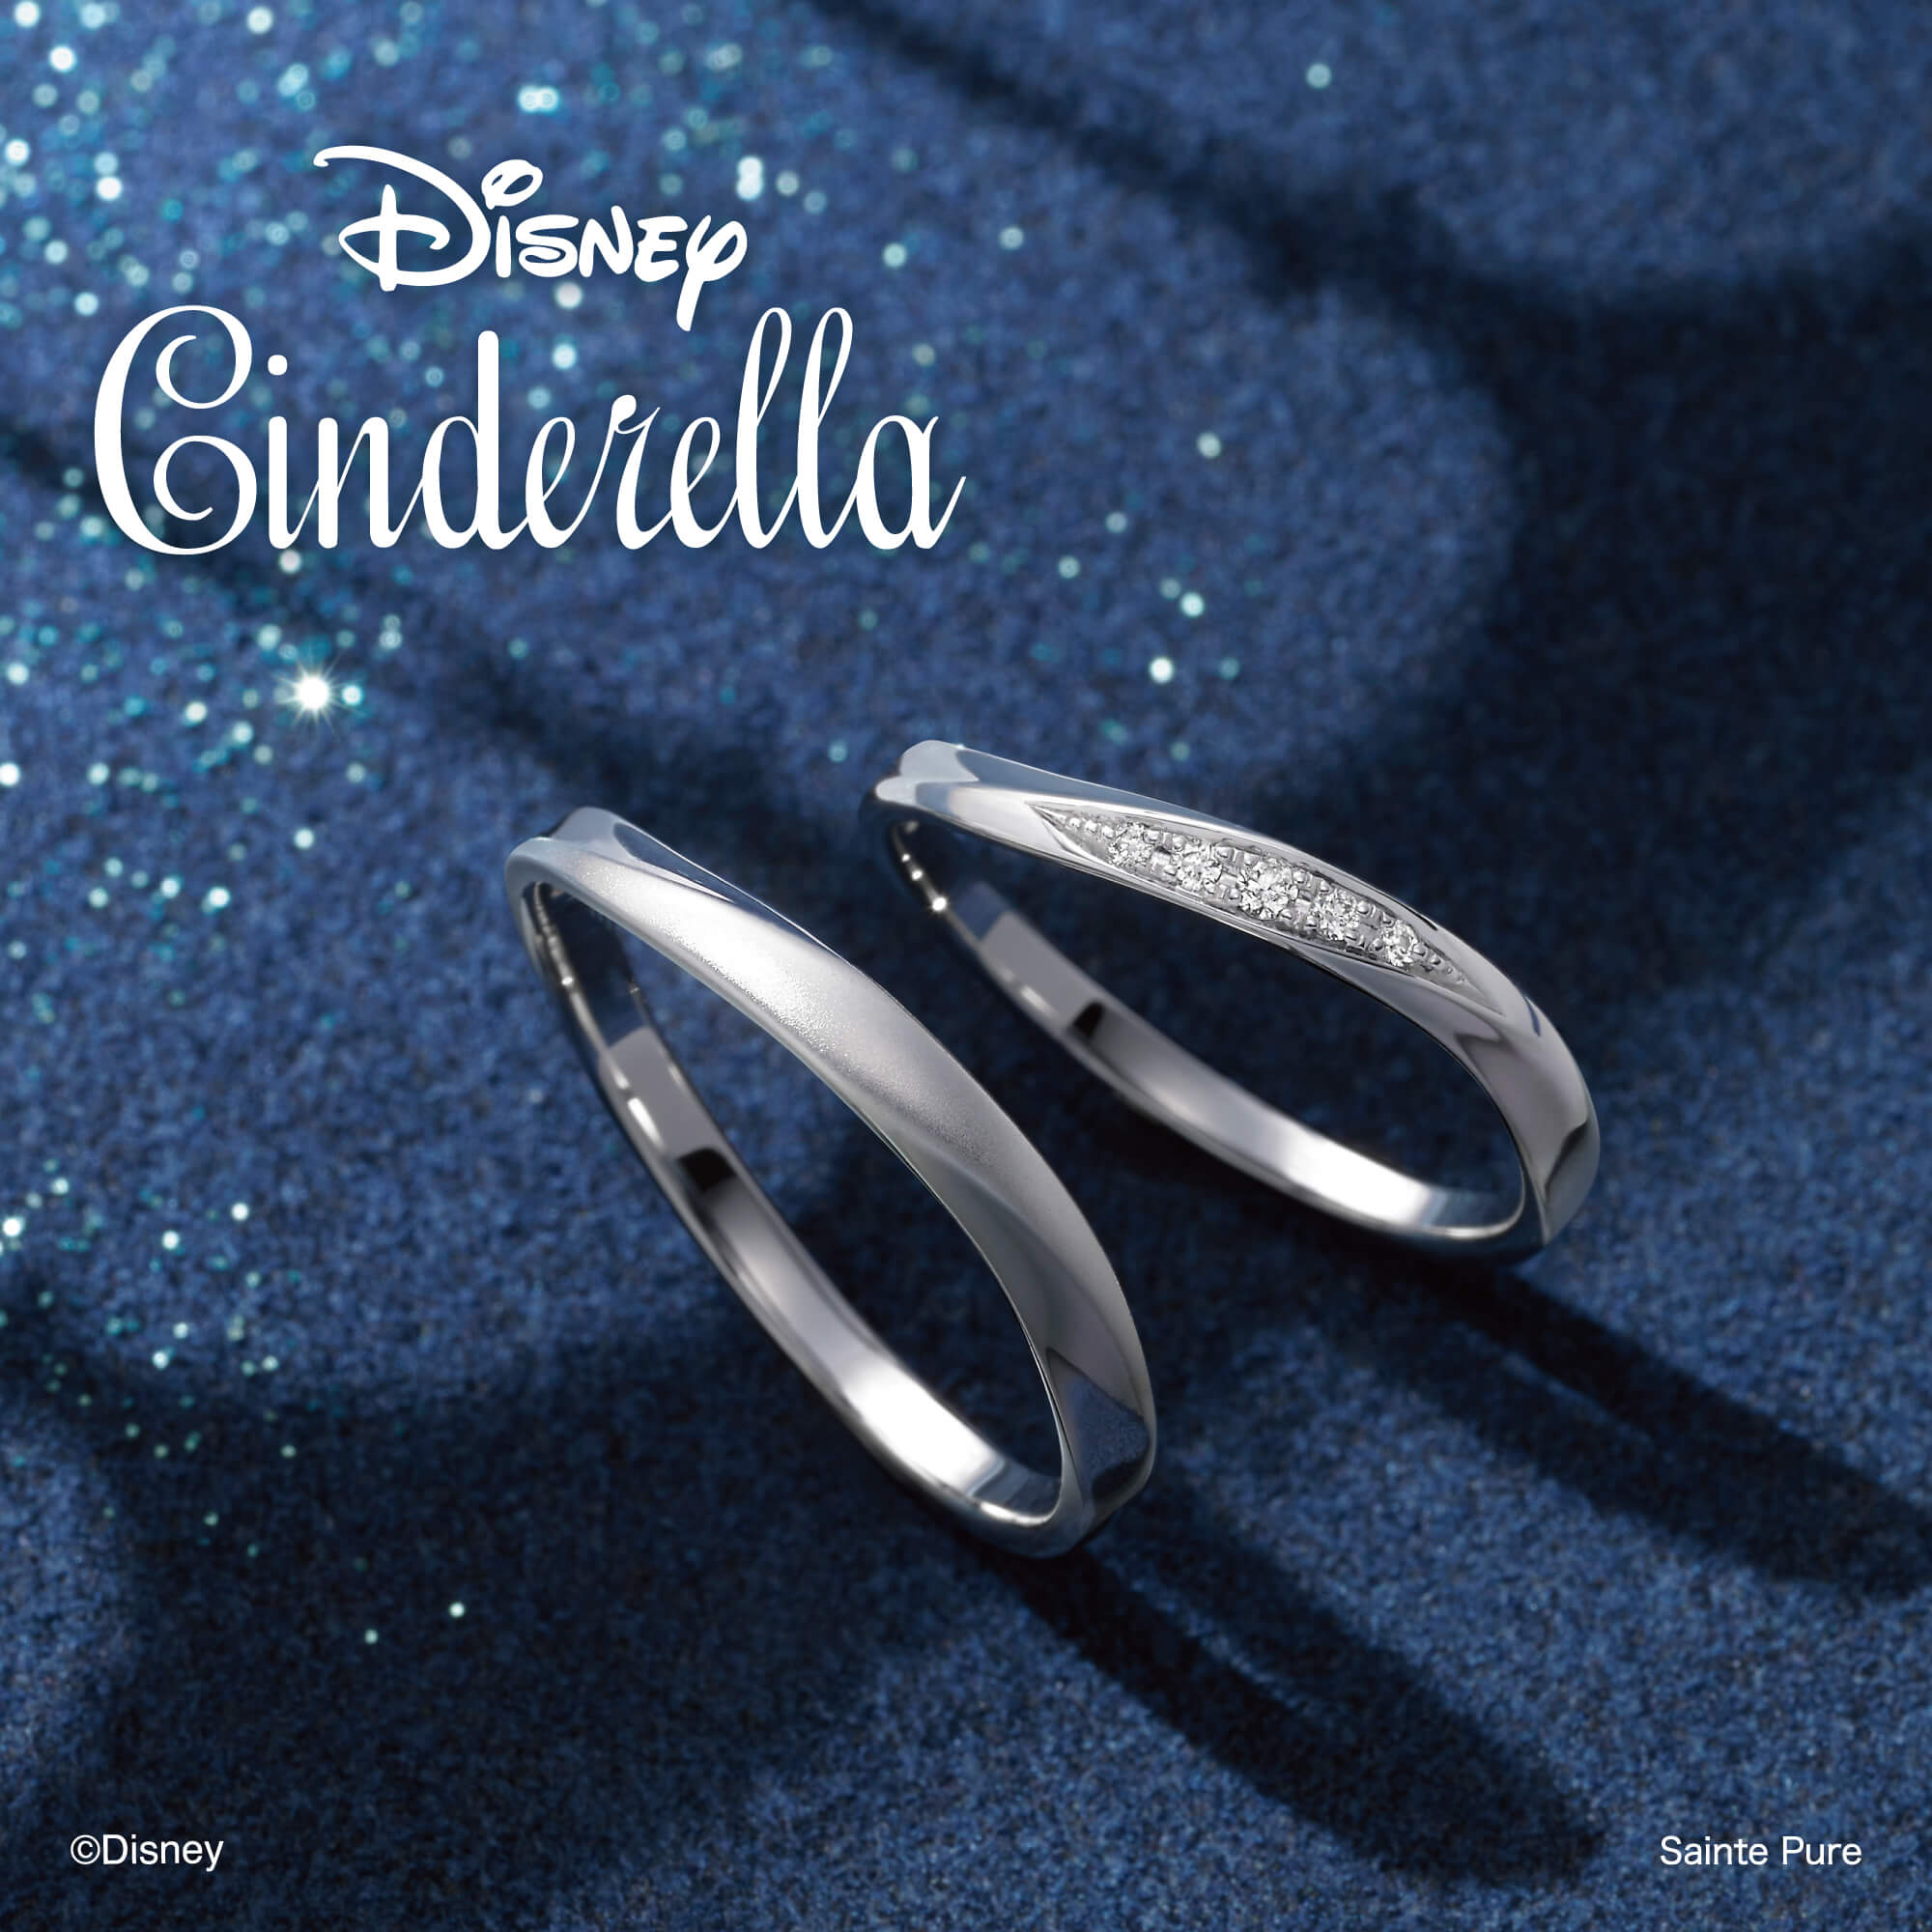 DisneyCinderellaディズニーシンデレラの結婚指輪マリッジリングMarriageringのWishComeTrueウィッシュカムトゥルー